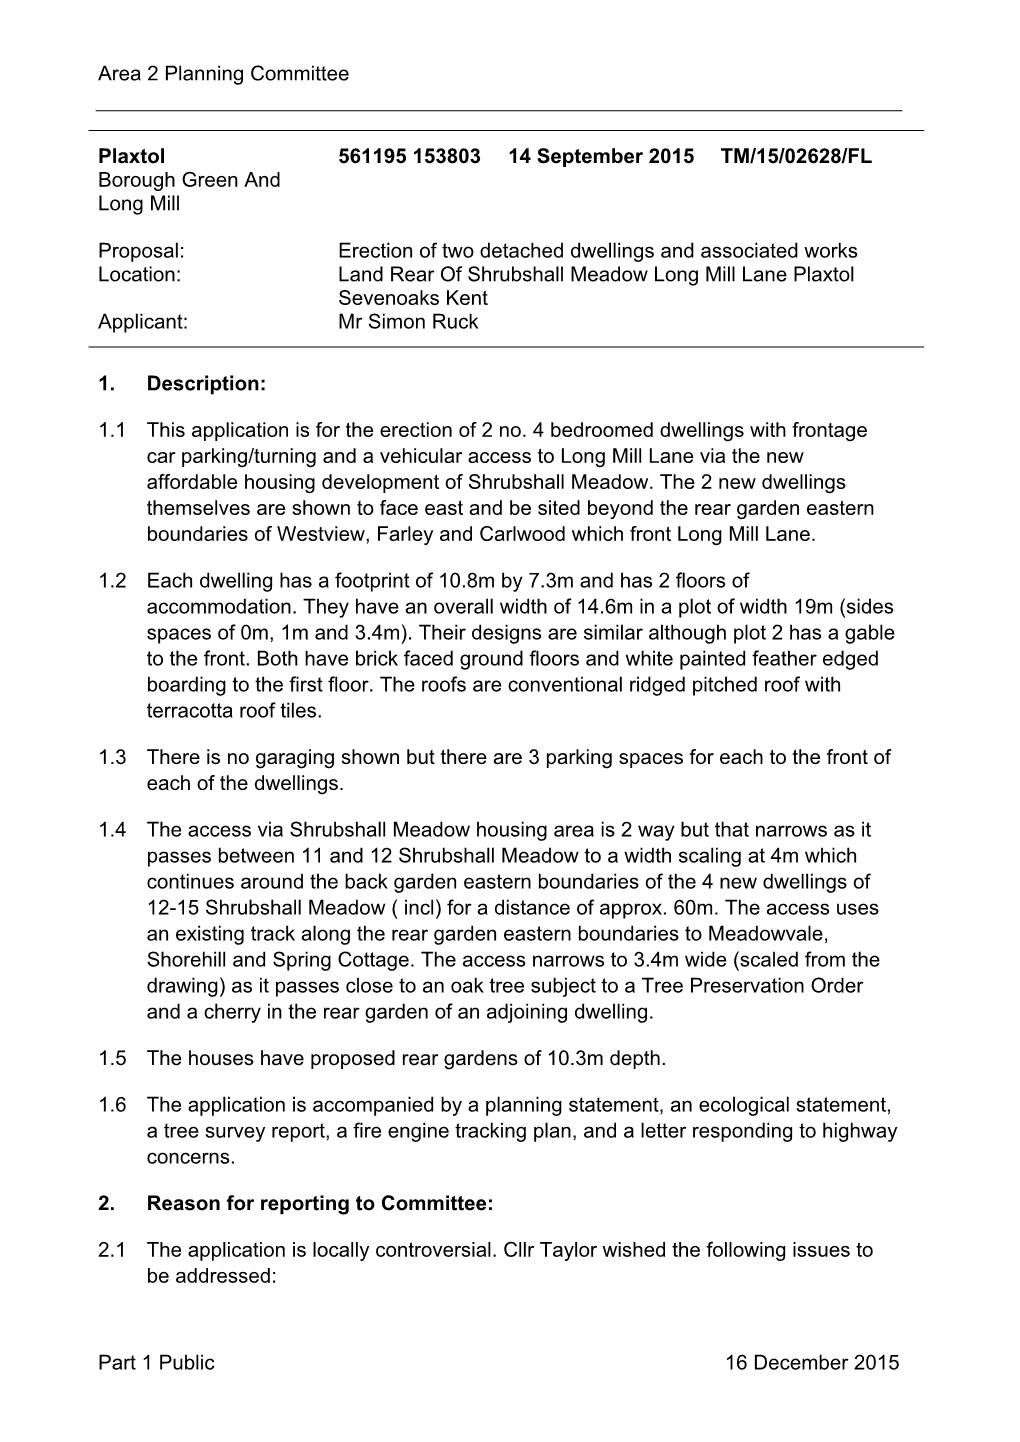 Area 2 Planning Committee Part 1 Public 16 December 2015 Plaxtol